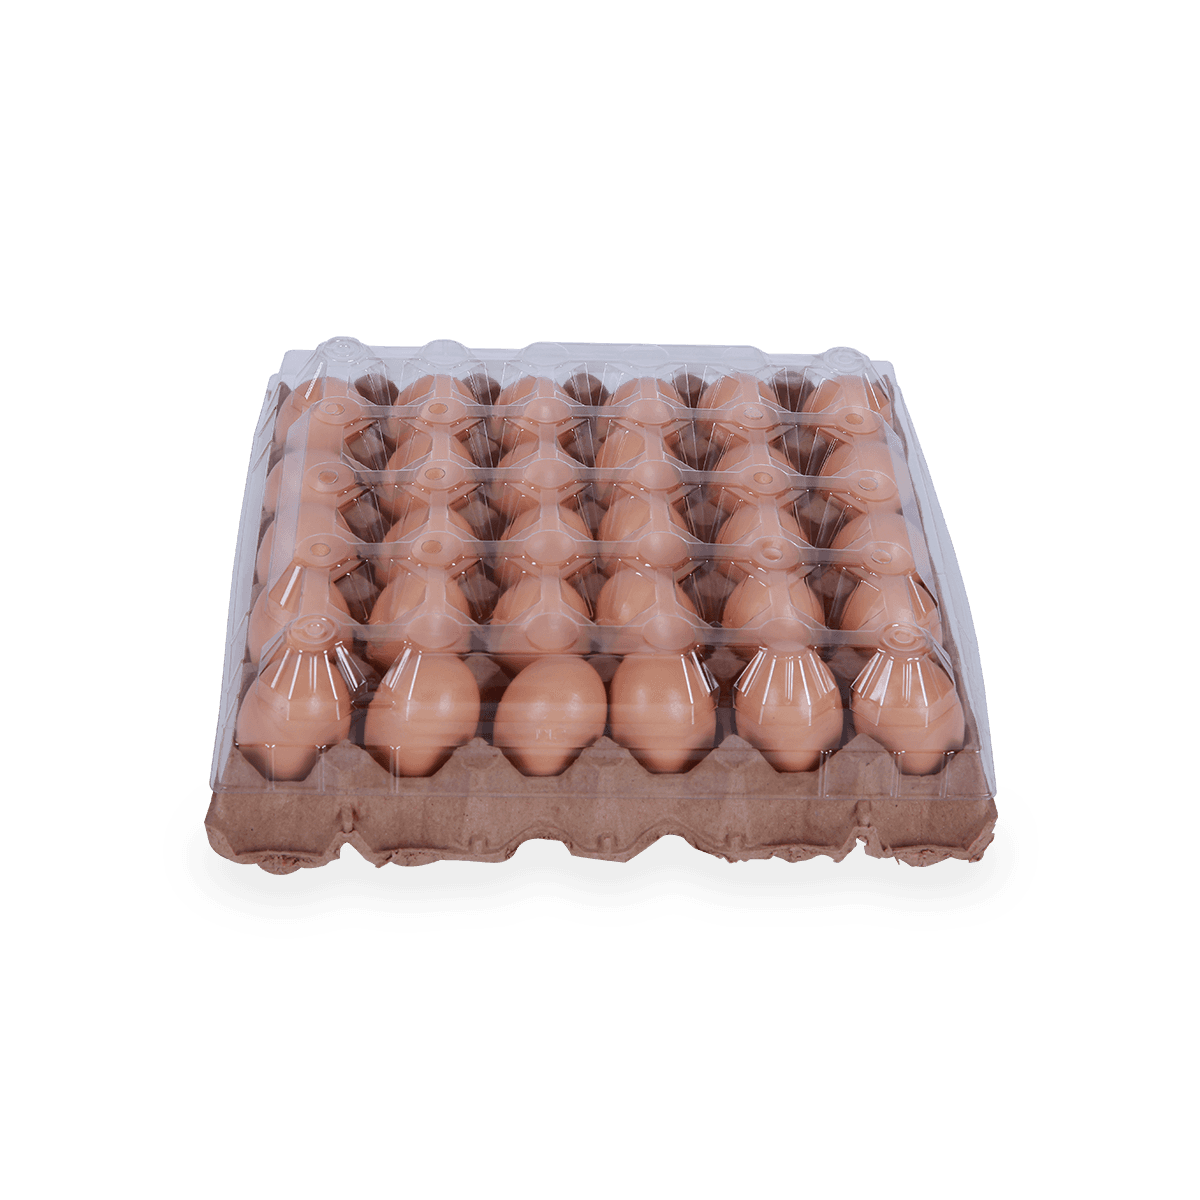 Plastic egg carton lid